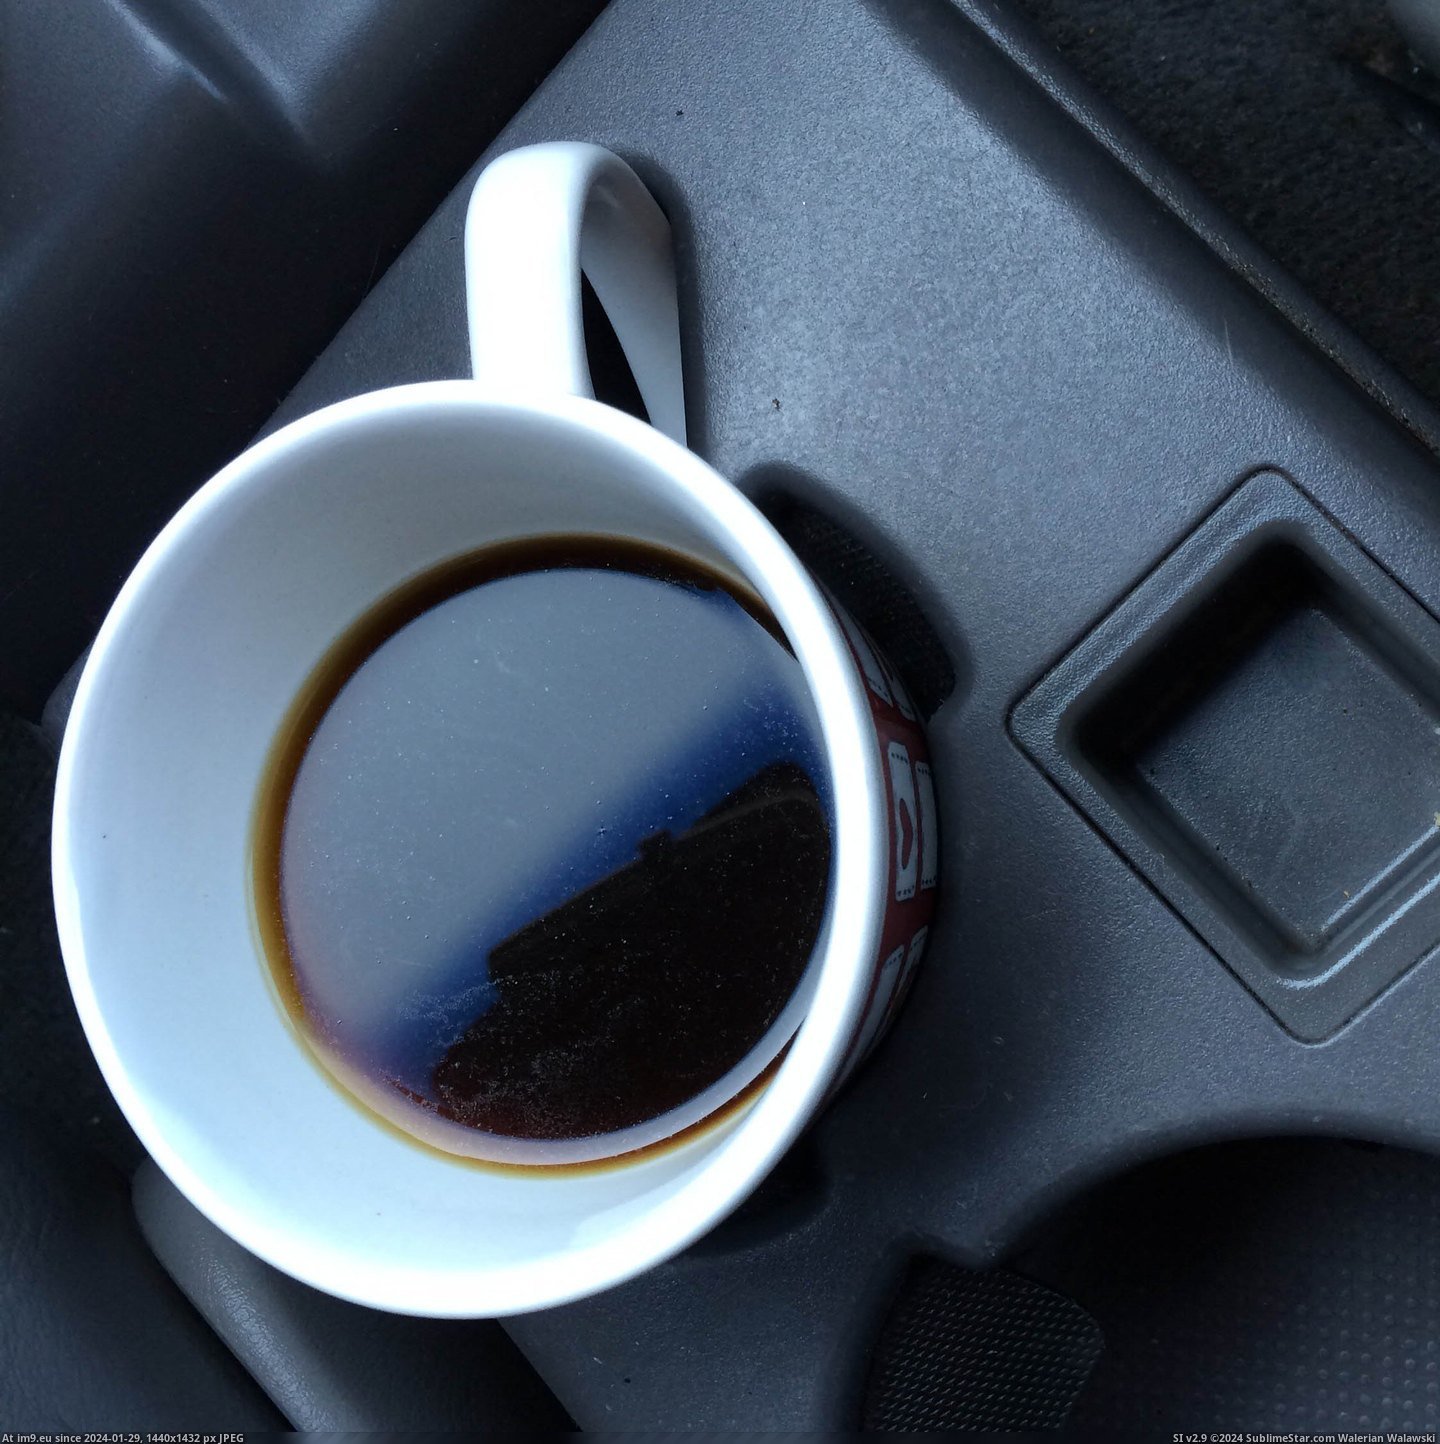 #Cup #Truck #Handles #Holders #Designed #Mug [Mildlyinteresting] The cup holders in my truck appear to be designed for mug handles. Pic. (Obraz z album My r/MILDLYINTERESTING favs))